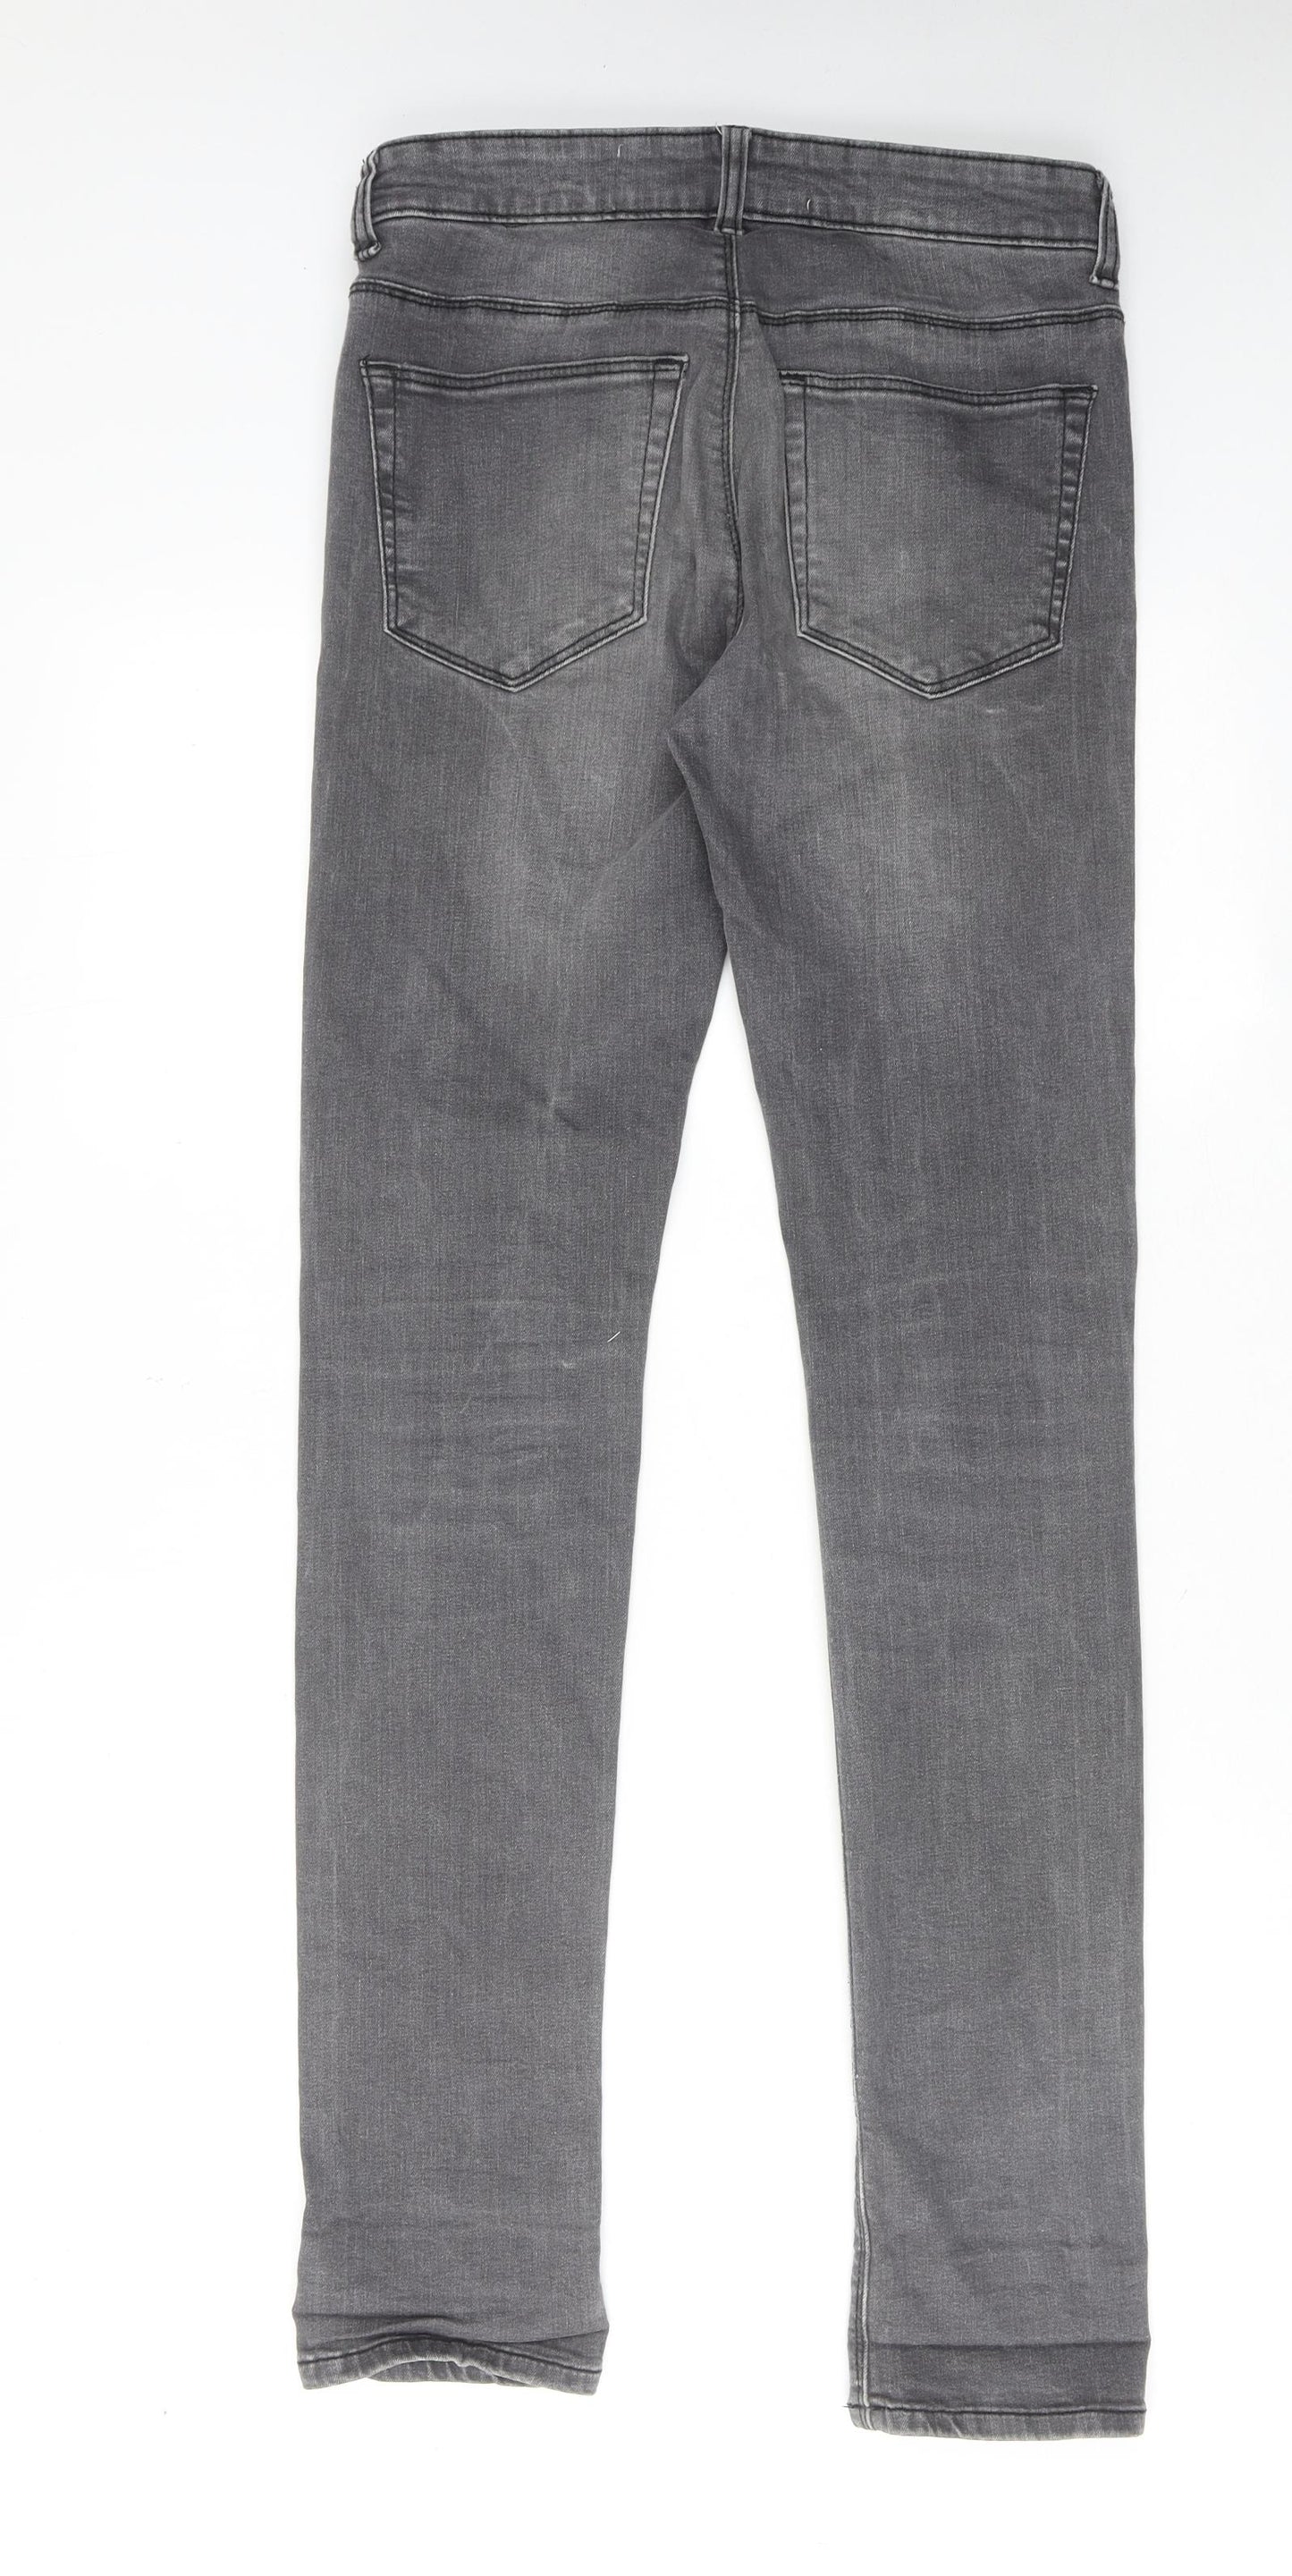 New Look Mens Grey Cotton Skinny Jeans Size 30 in L34 in Regular Zip